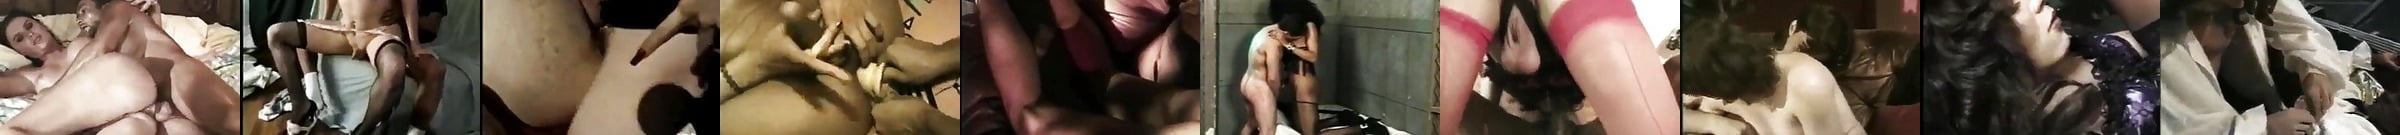 A Tranny Nightclub Free Shemale Nightclub Porn Video Dc XHamster